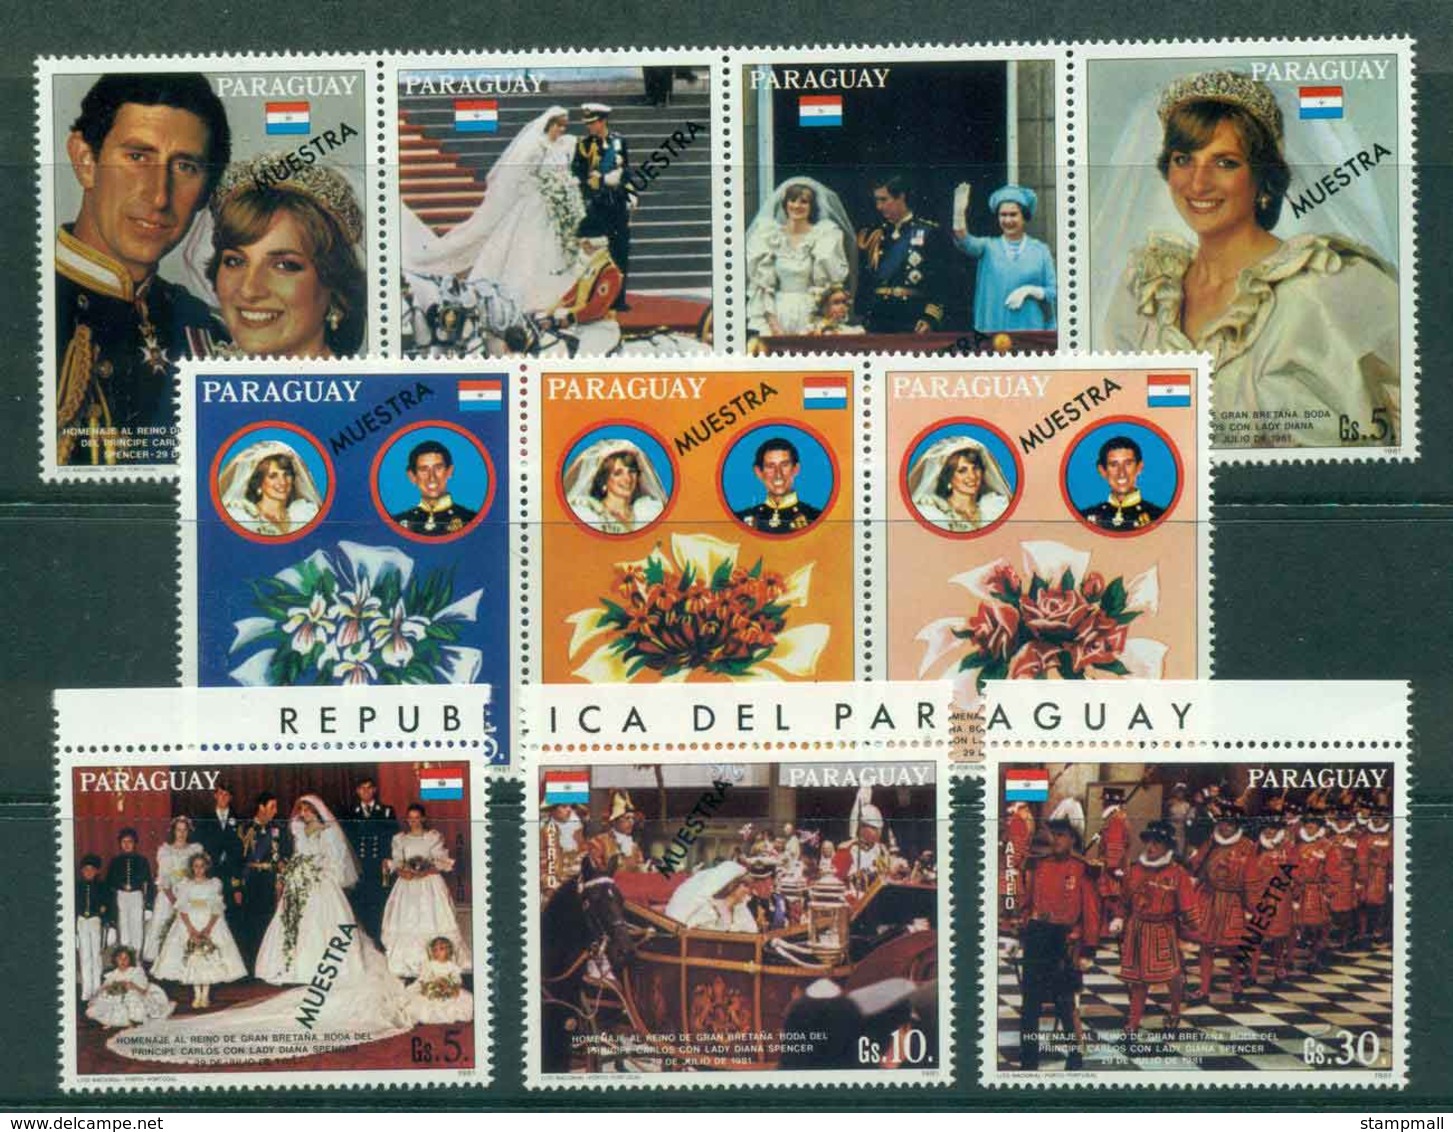 Paraguay 1981 Charles & Diana Wedding Str4,3 + 4 SPECIMEN (light Creases)MUH Lot45153 - Paraguay